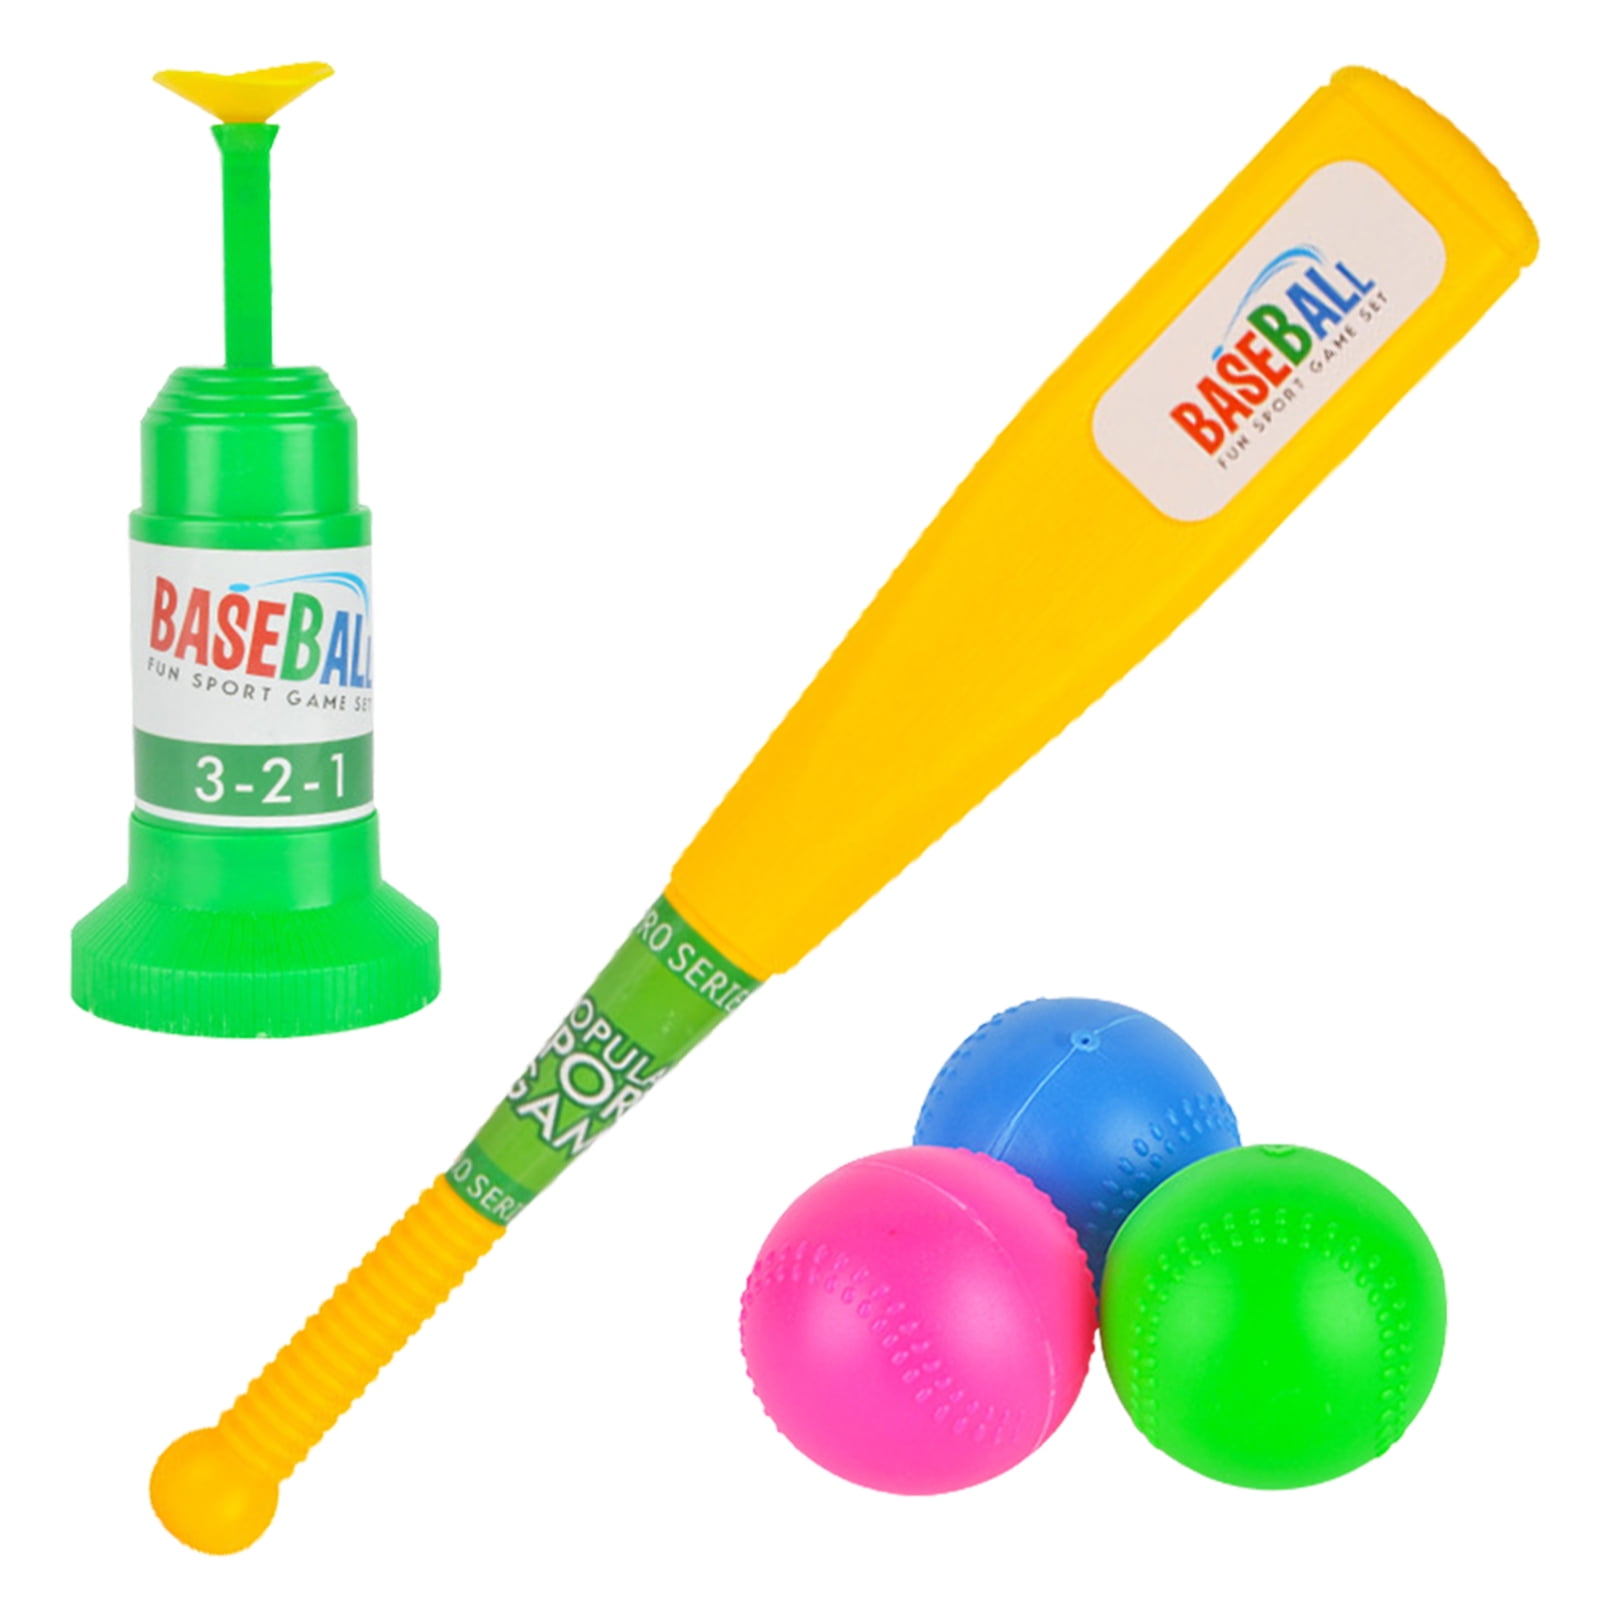 Automatic Launcher Baseball Bat Toys Indoor Outdoor Sports Baseball Games For Kids 1Bat 2Ball 1Glove 